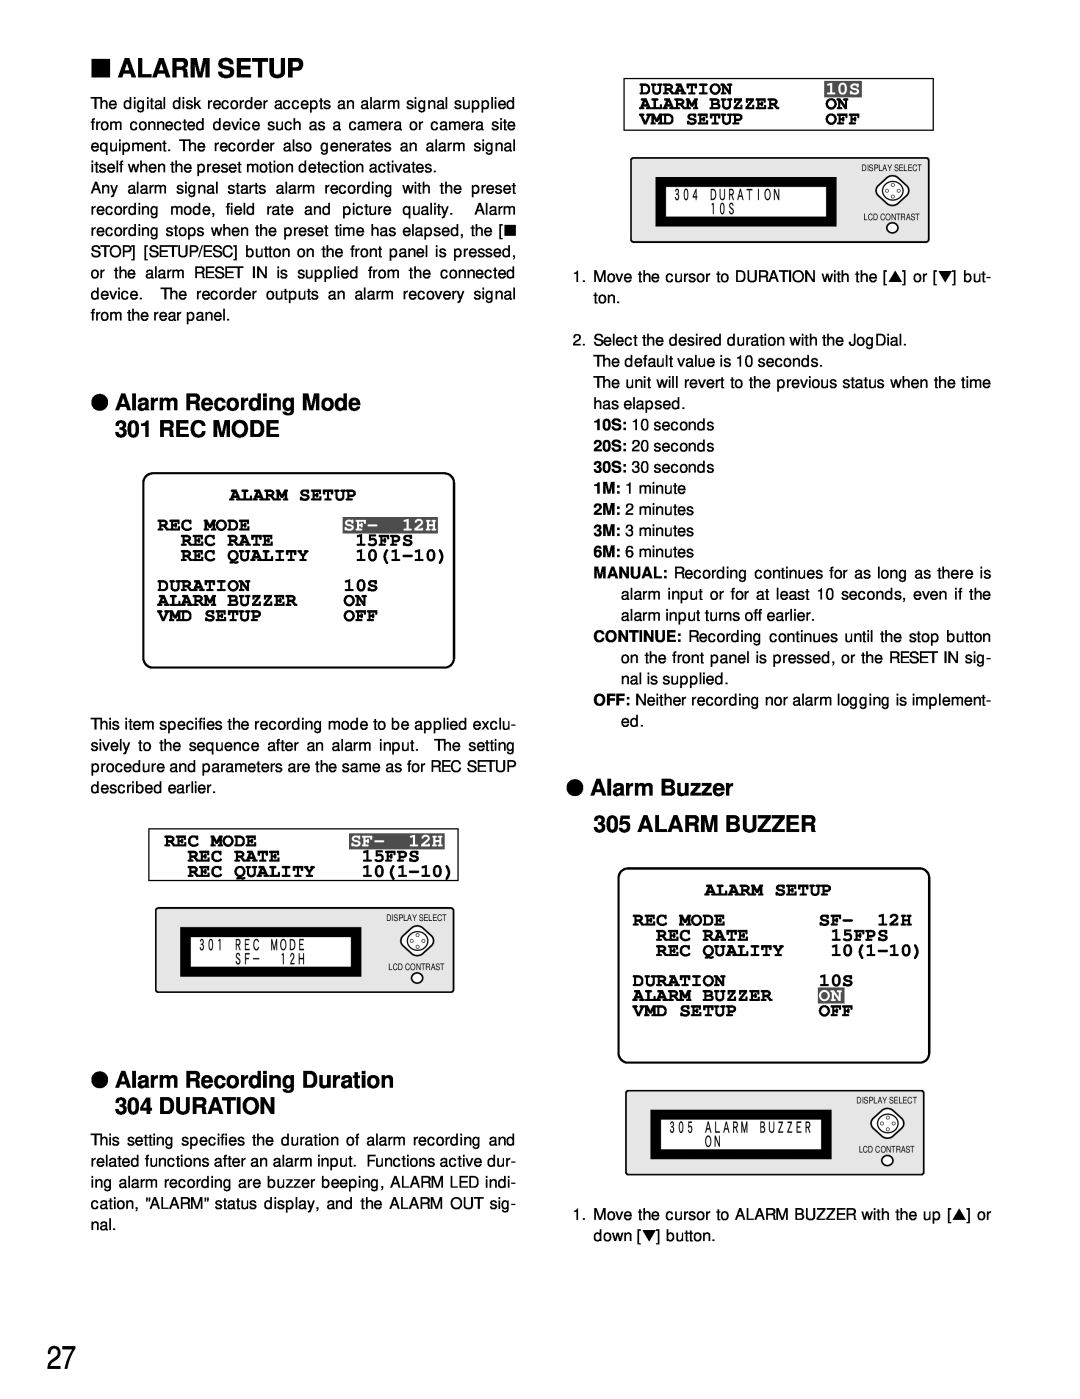 Panasonic WJ-HD100 Alarm Setup, Alarm Recording Mode 301 REC MODE, Alarm Recording Duration 304 DURATION, SF- 12H 